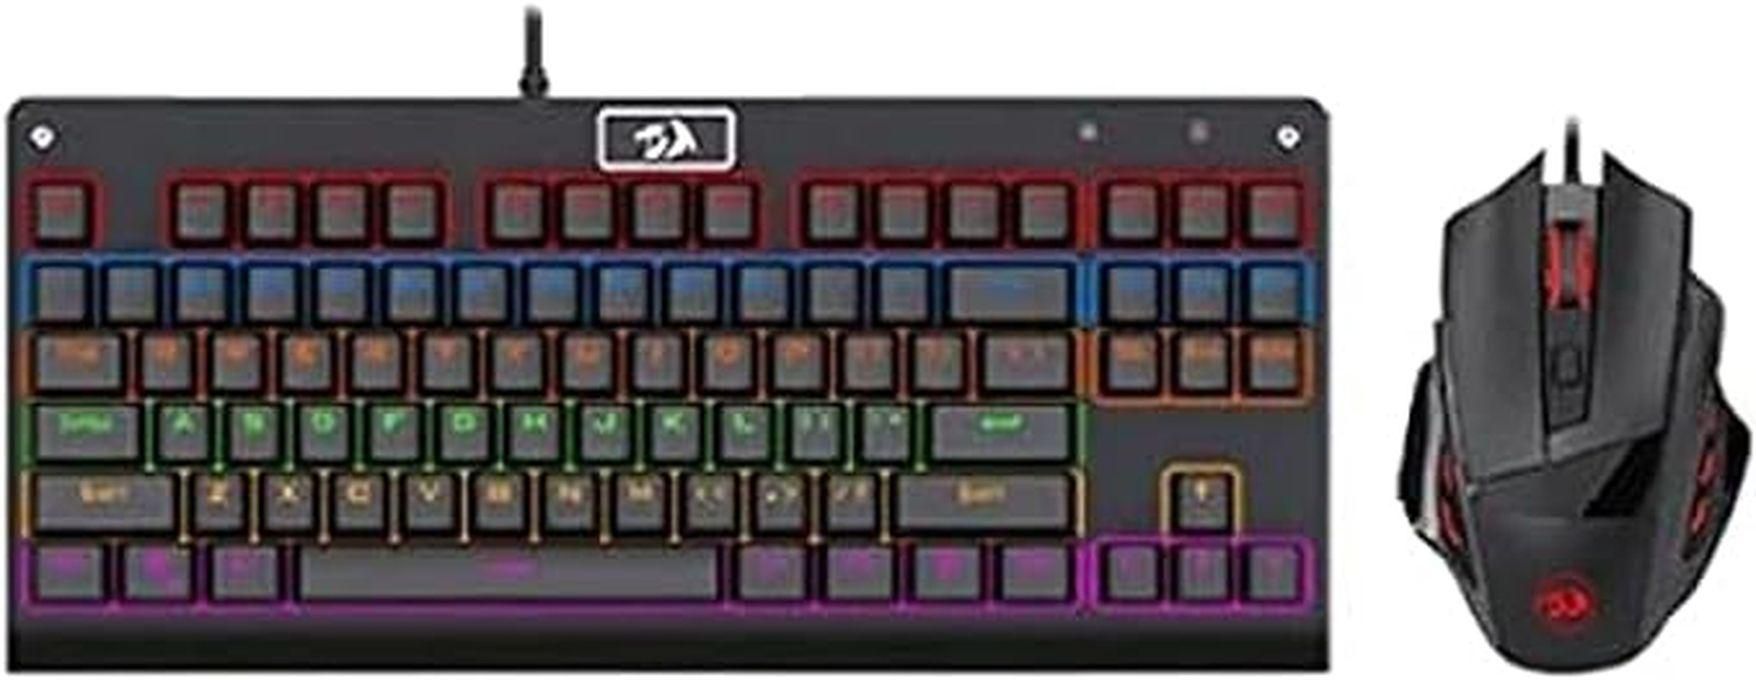 Rapoo V500-S E Gaming Keyboard & Mouse